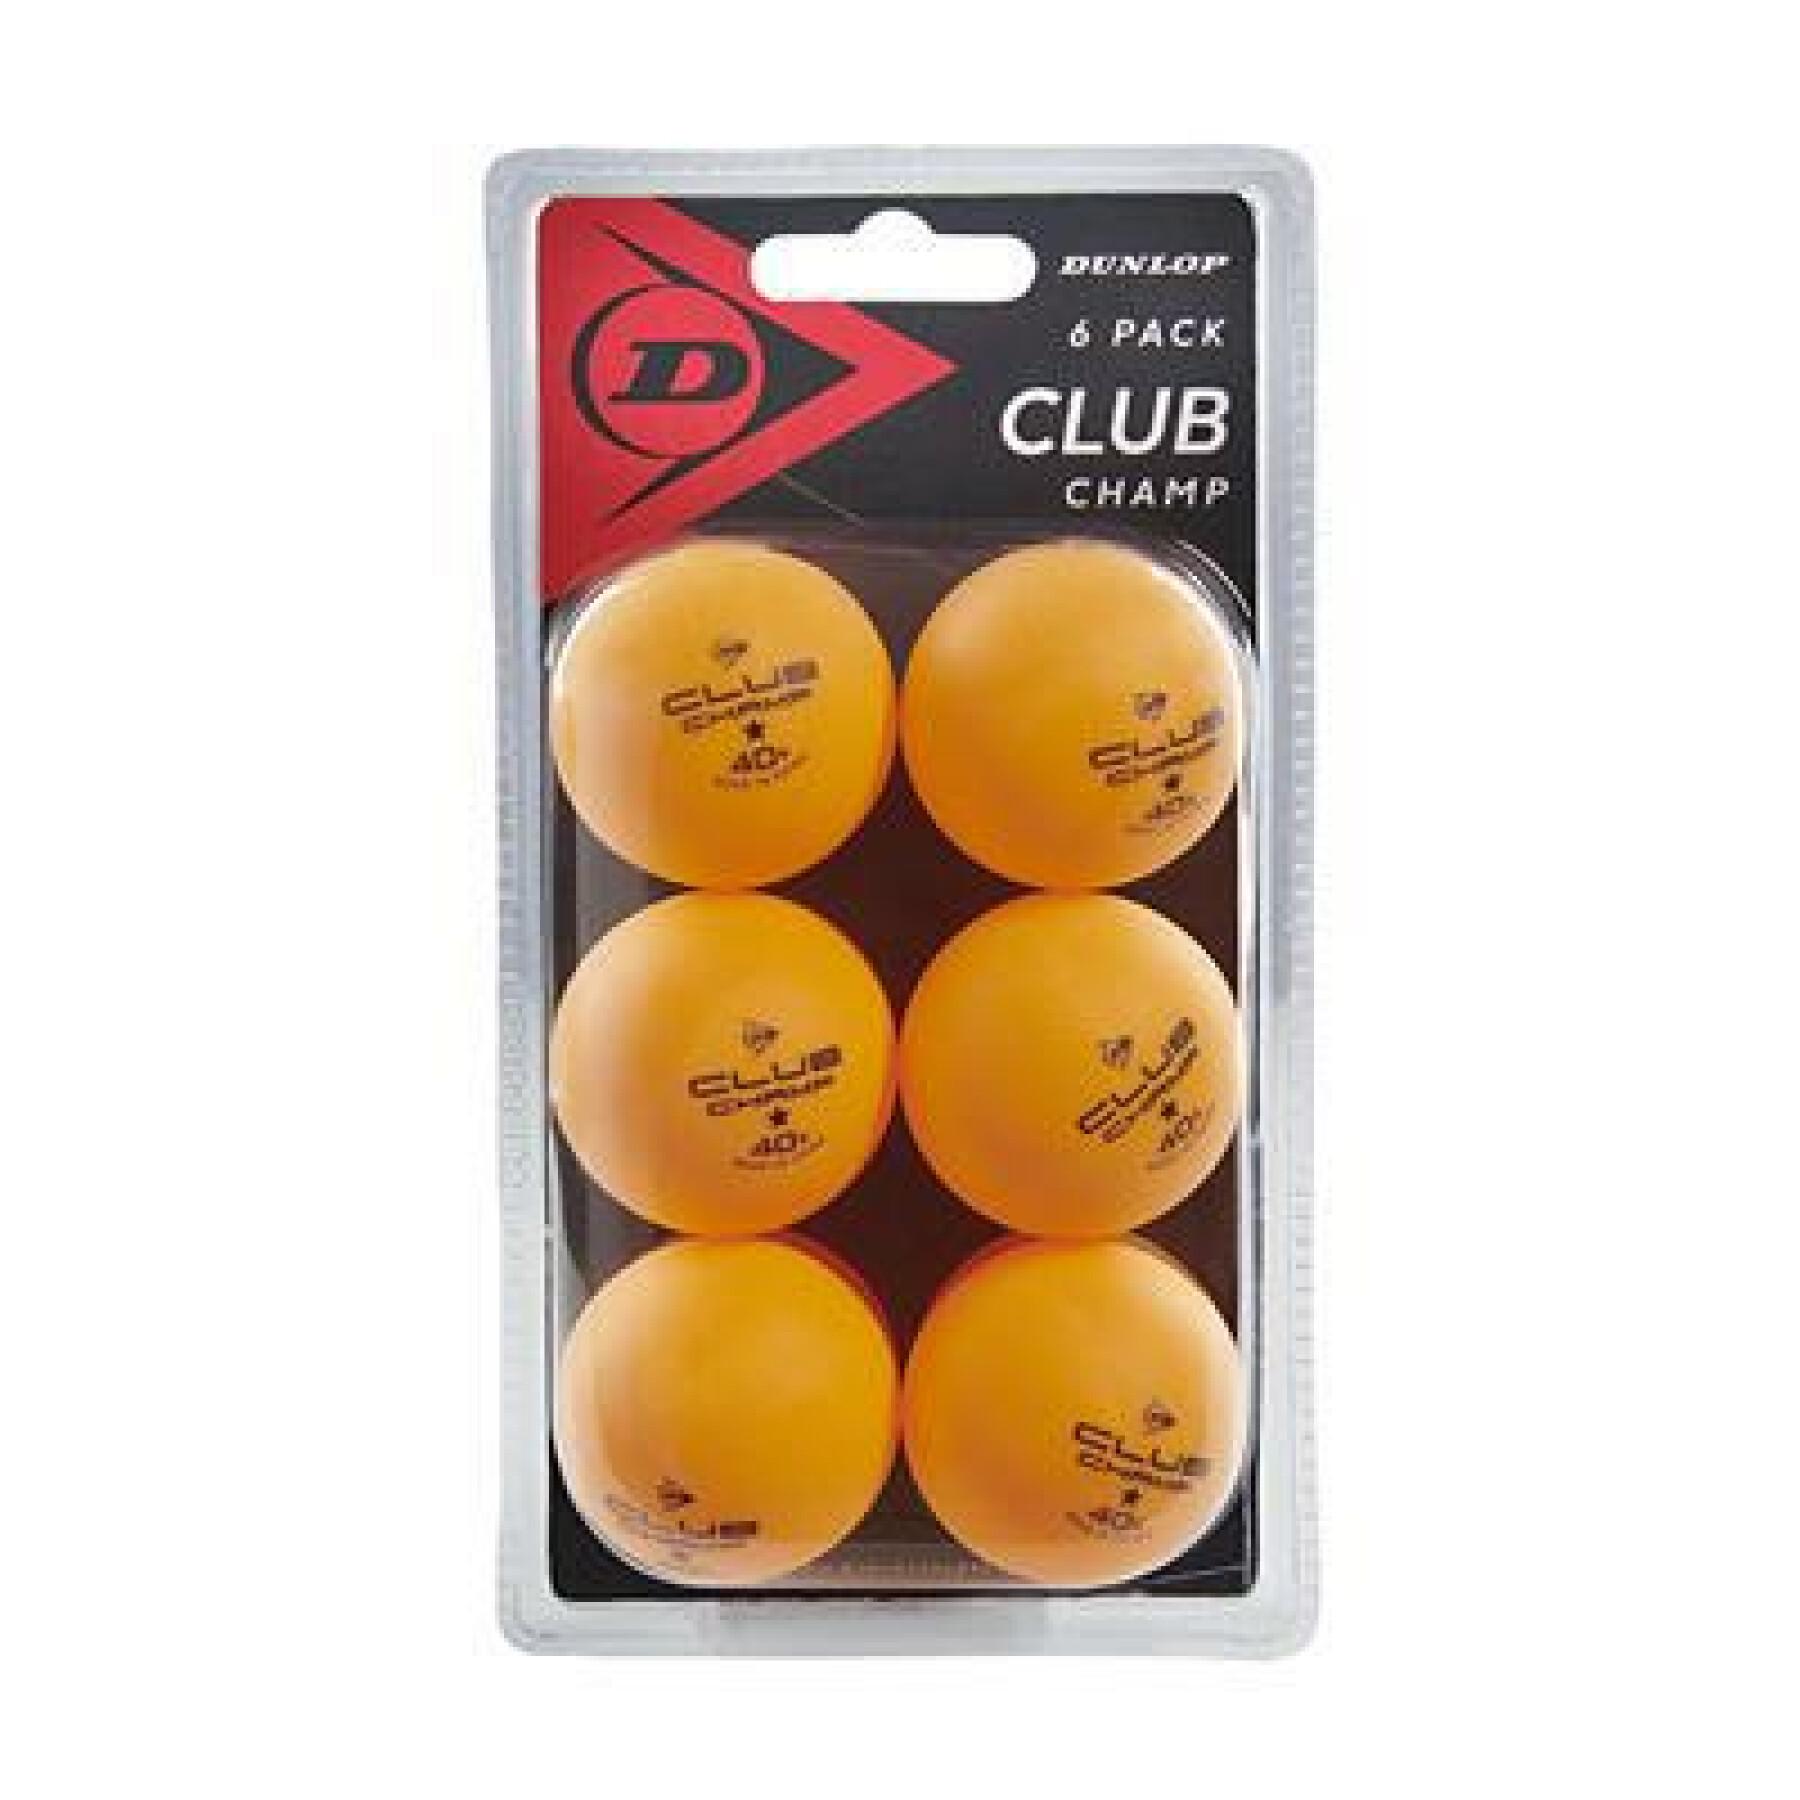 Conjunto de 6 bolas de ténis de mesa Dunlop 40+ club champ